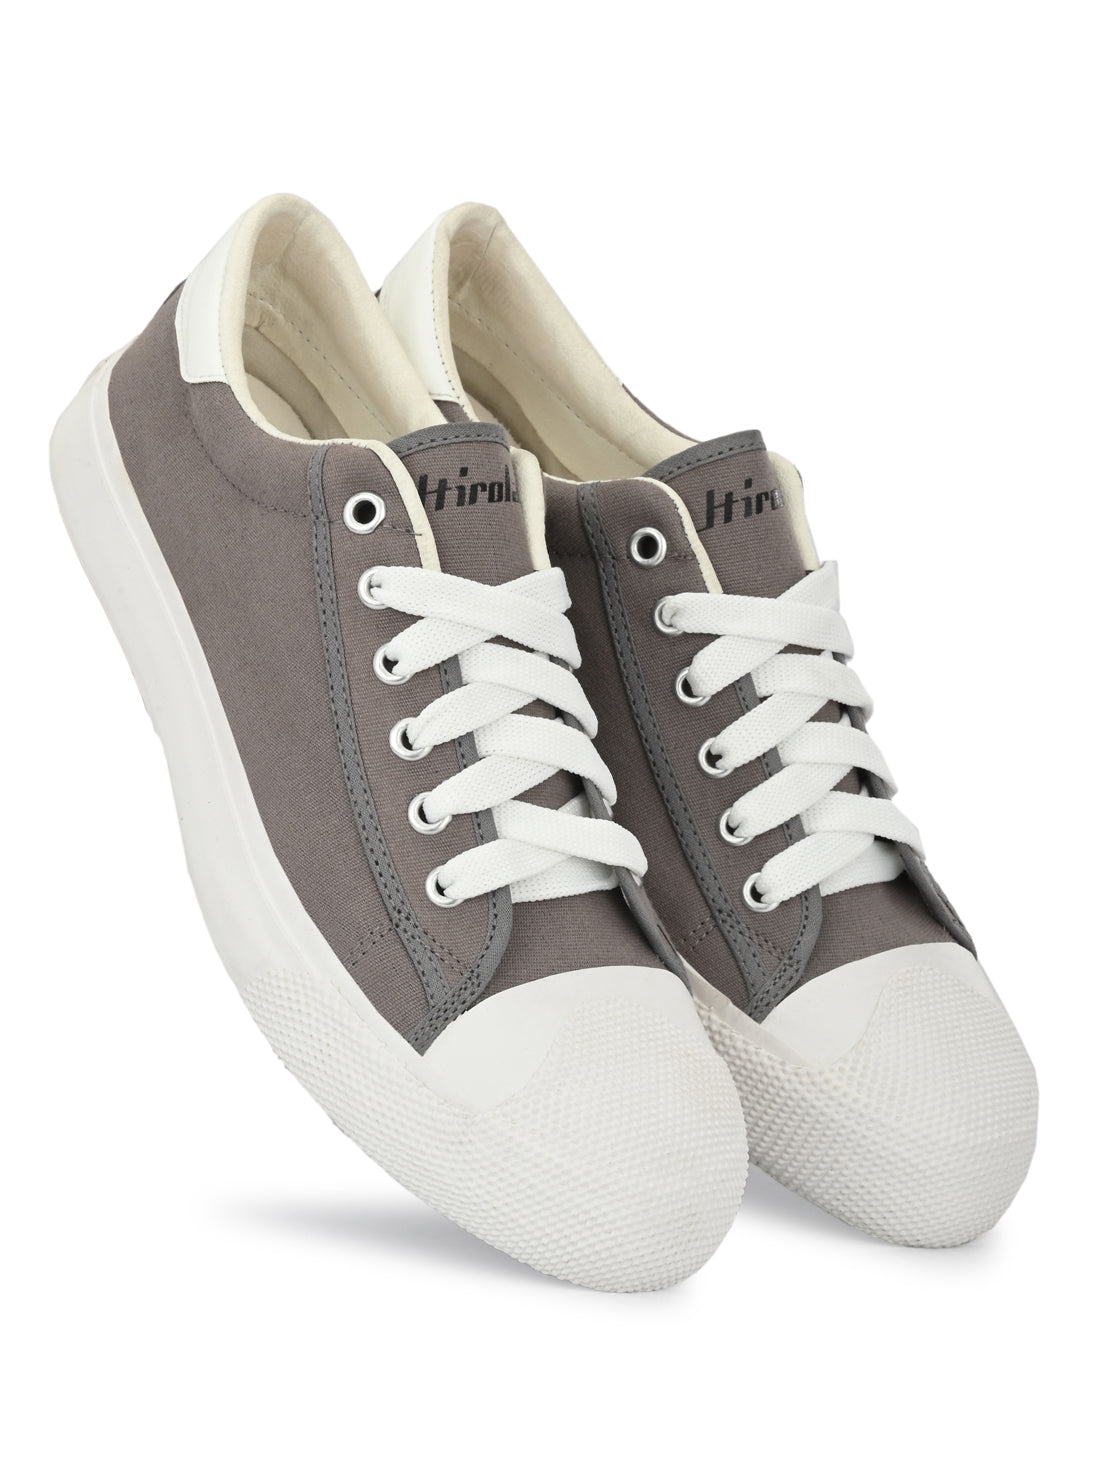 Hirolas® Men's Grey Canvas Vulcansied Skateboard Lace Up Sneaker Shoes (HRL2076GRY)